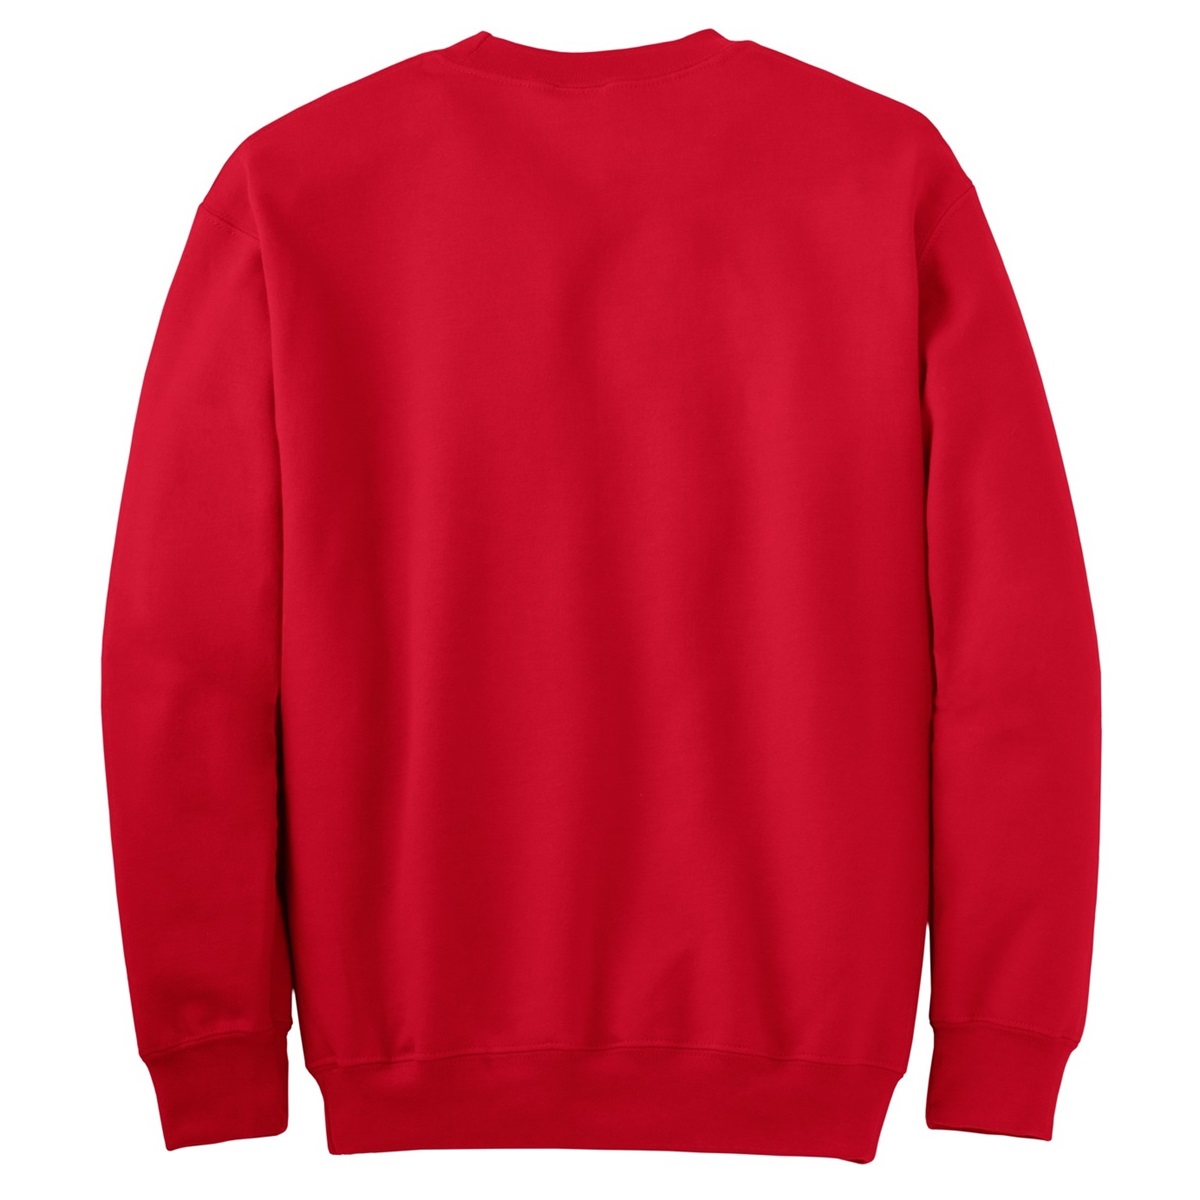 Gildan 12000 DryBlend Crewneck Sweatshirt - Red | FullSource.com